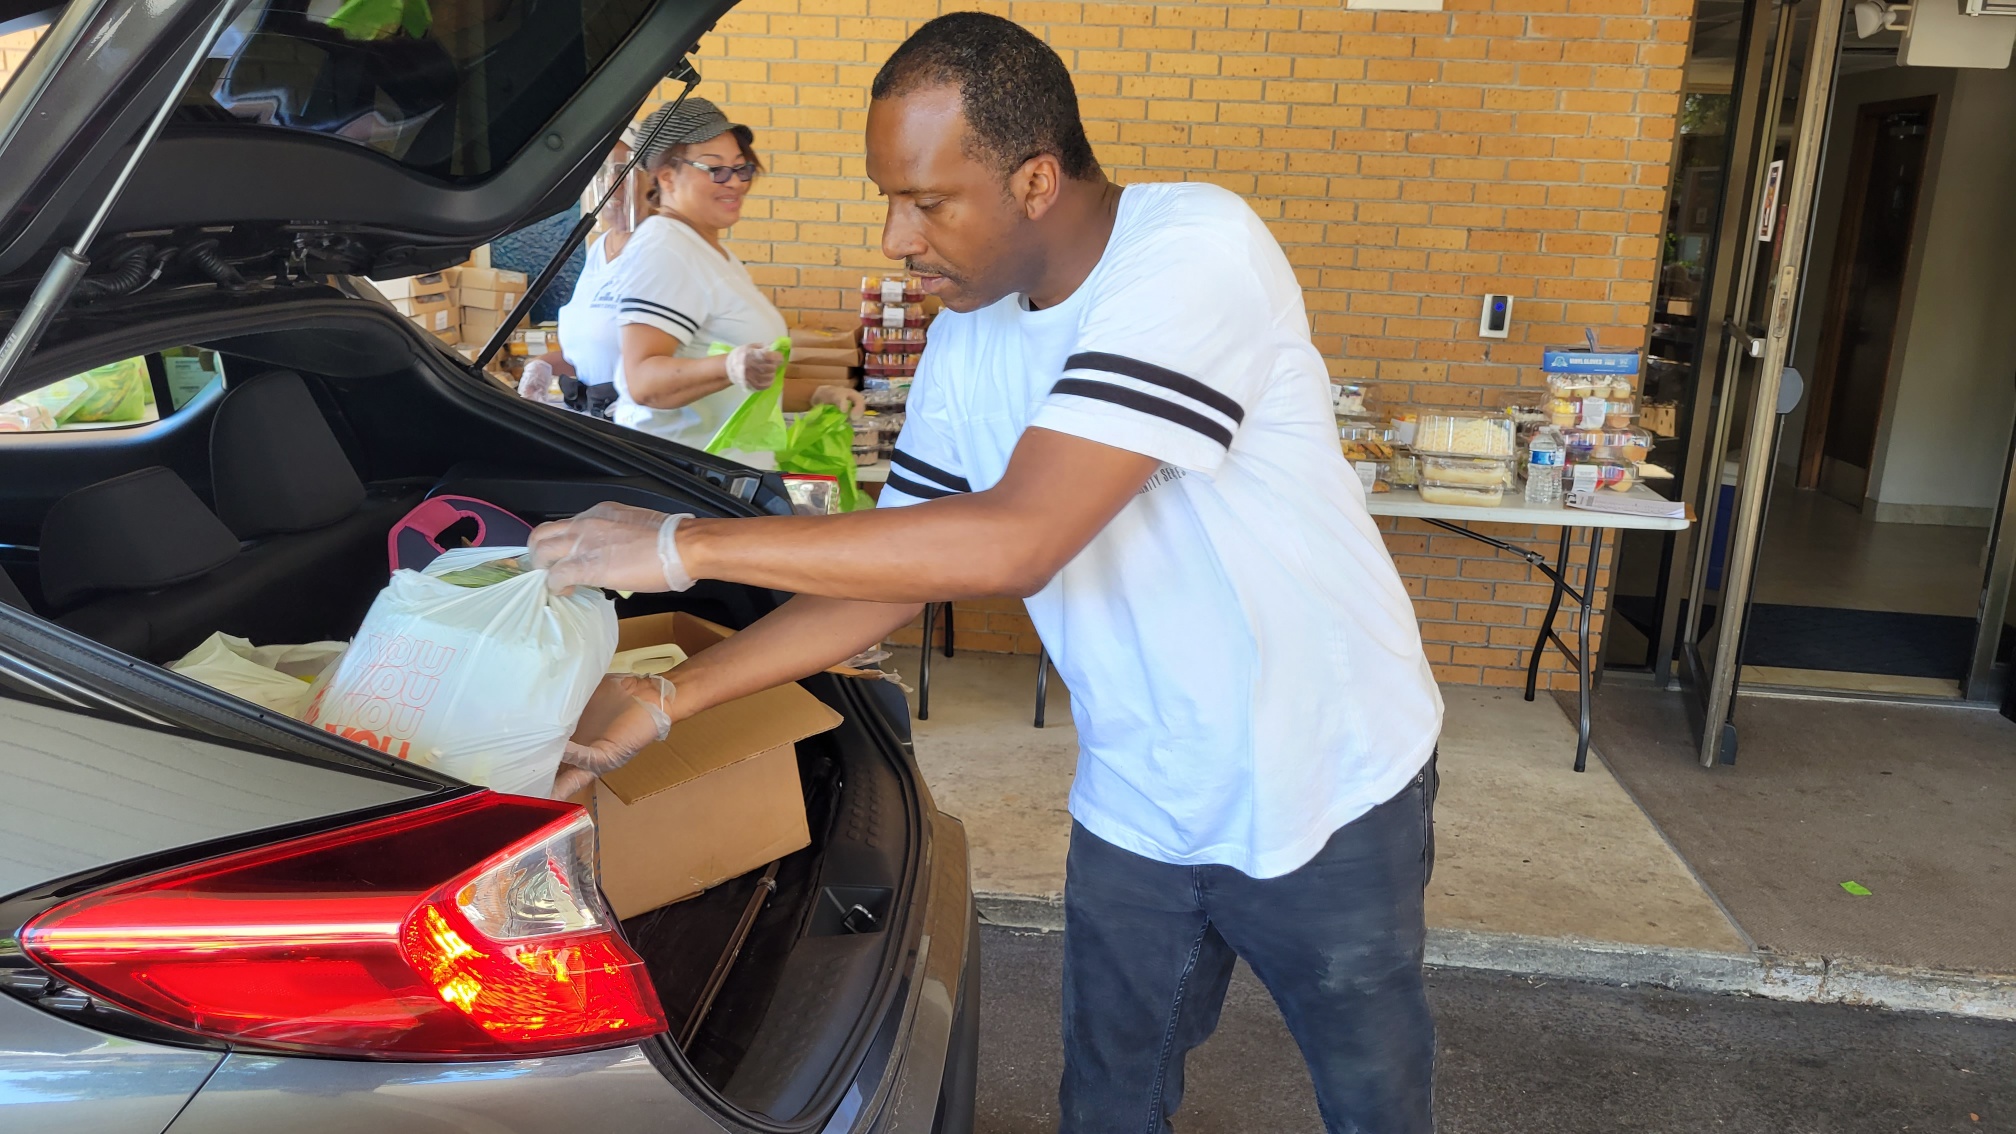 Black man loads groceries into a car